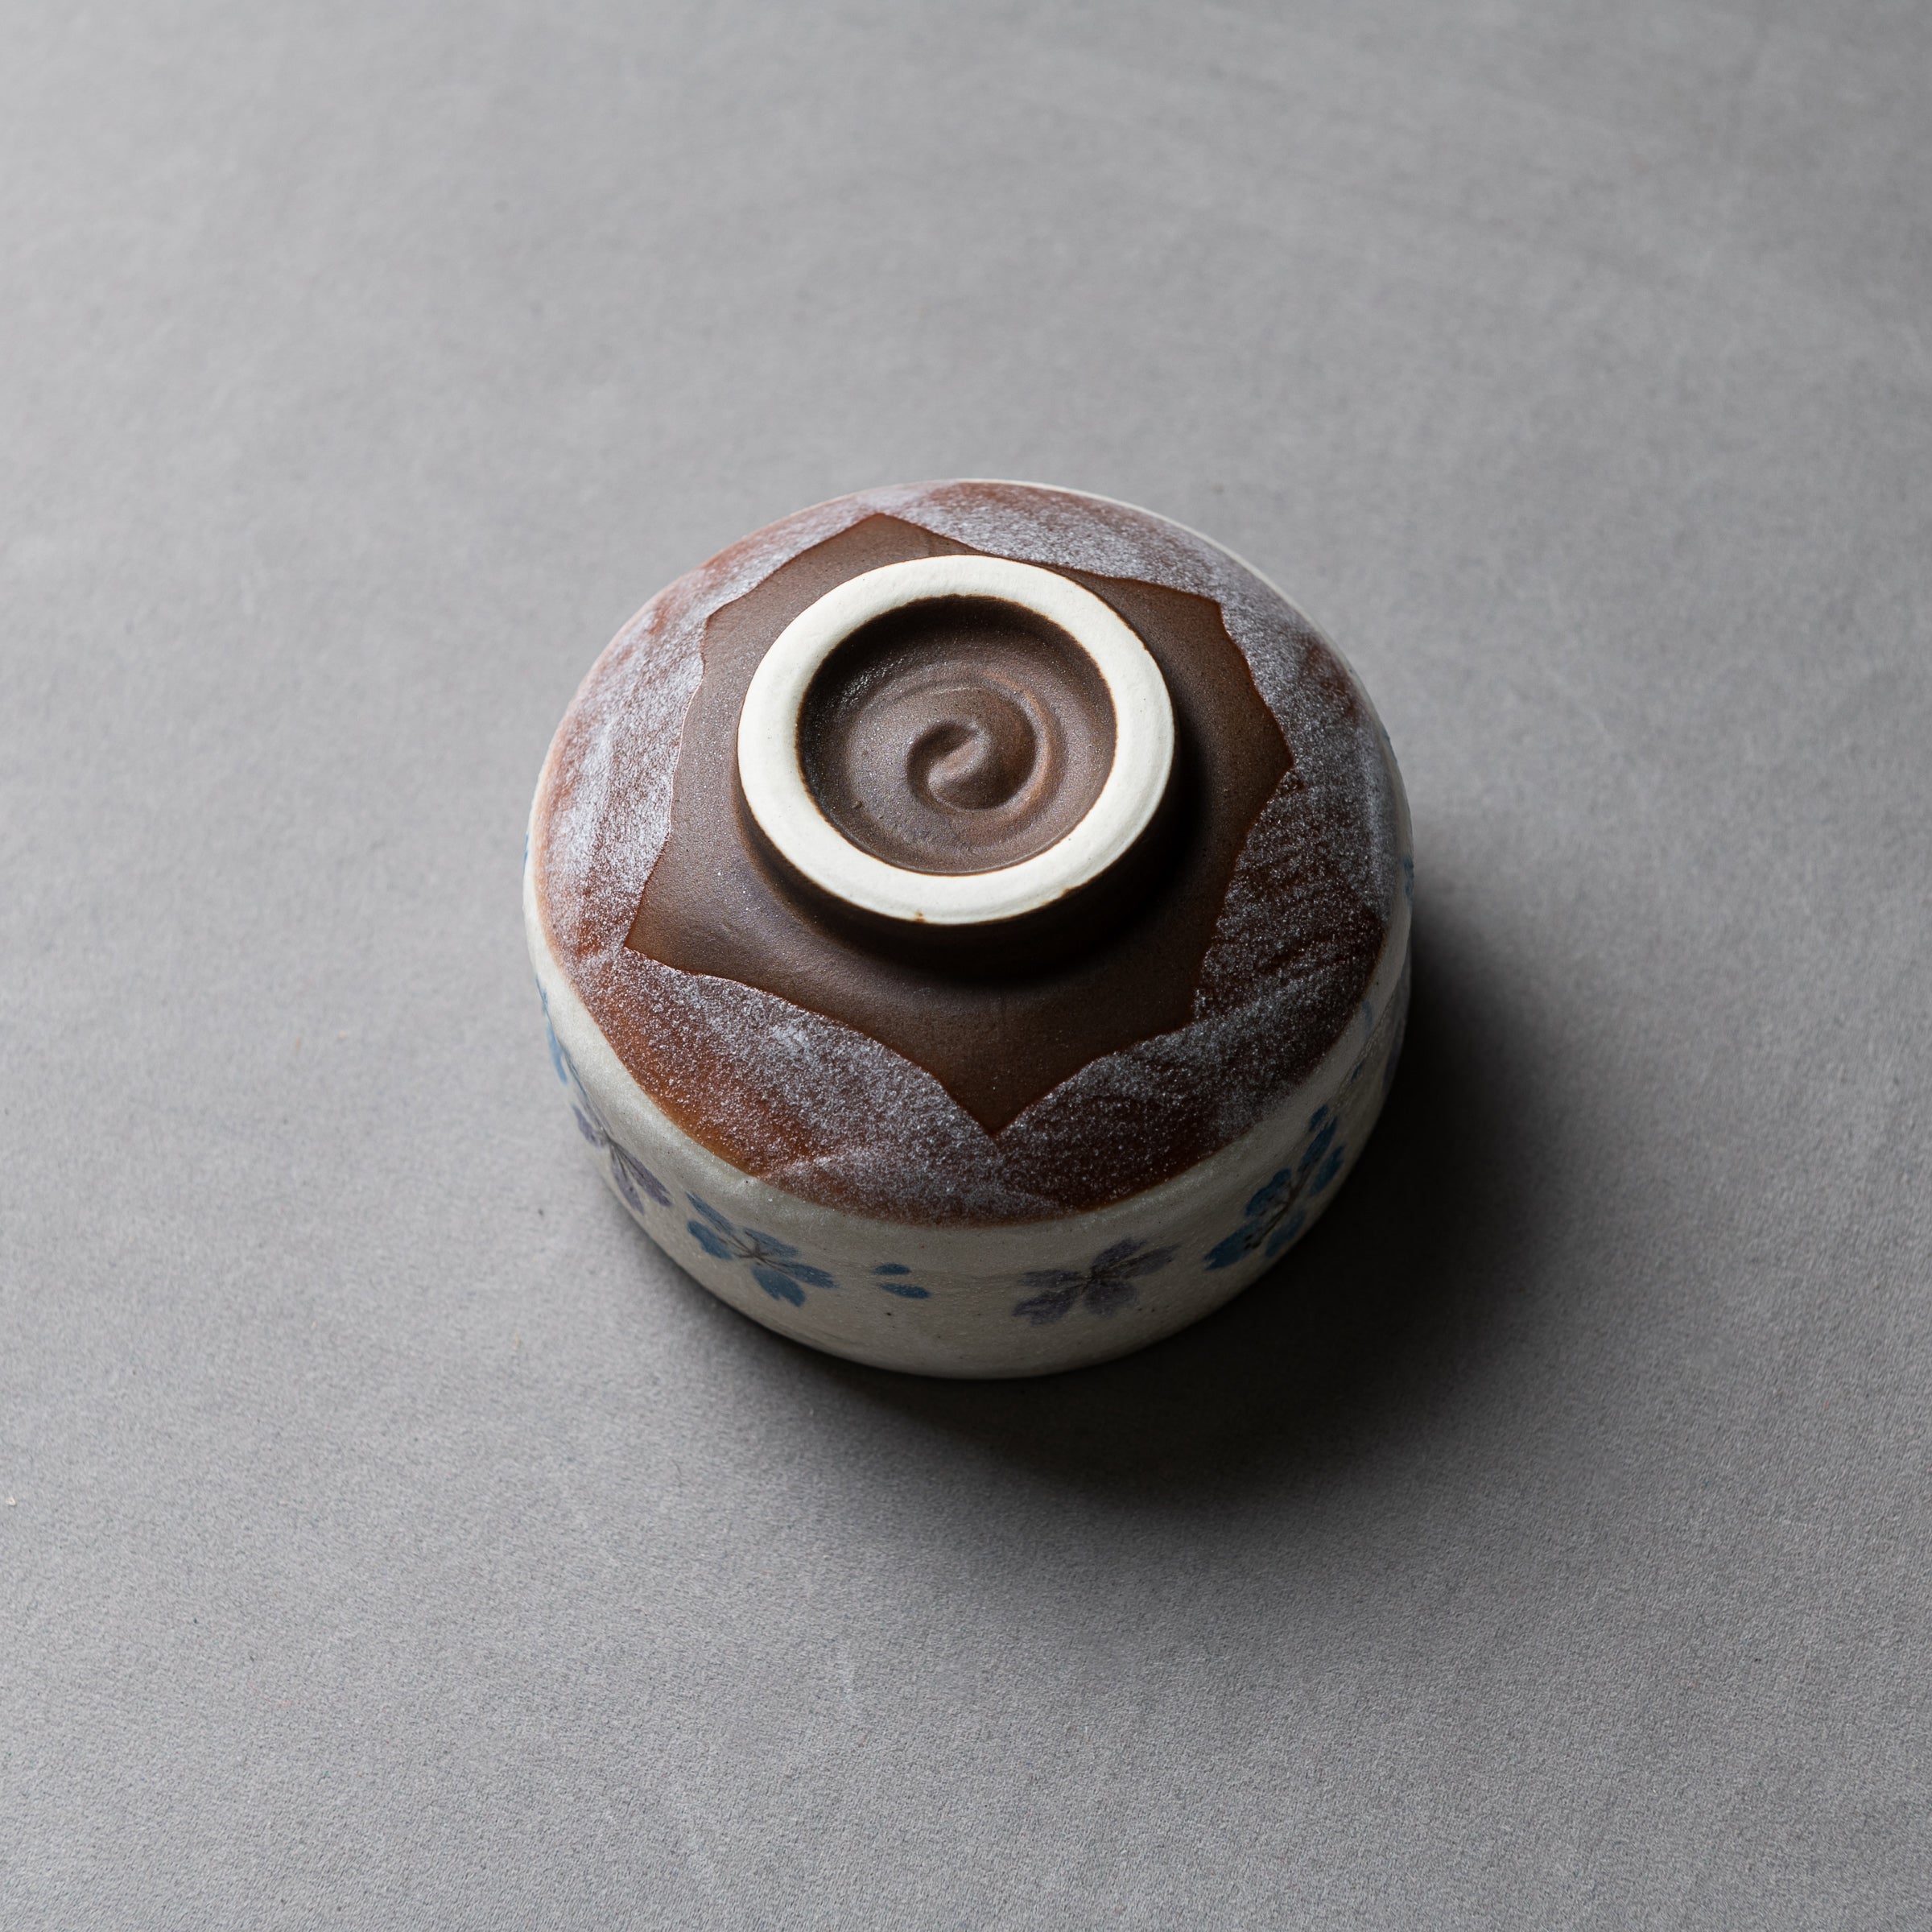 Mini Matcha Bowl Sakura - Blue / 抹茶碗 桜吹雪